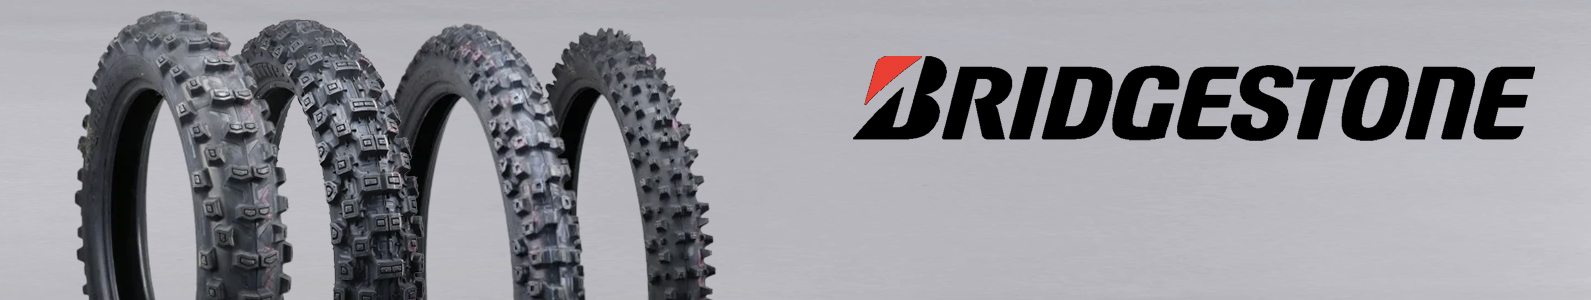 Bridgestone motorcycle tires